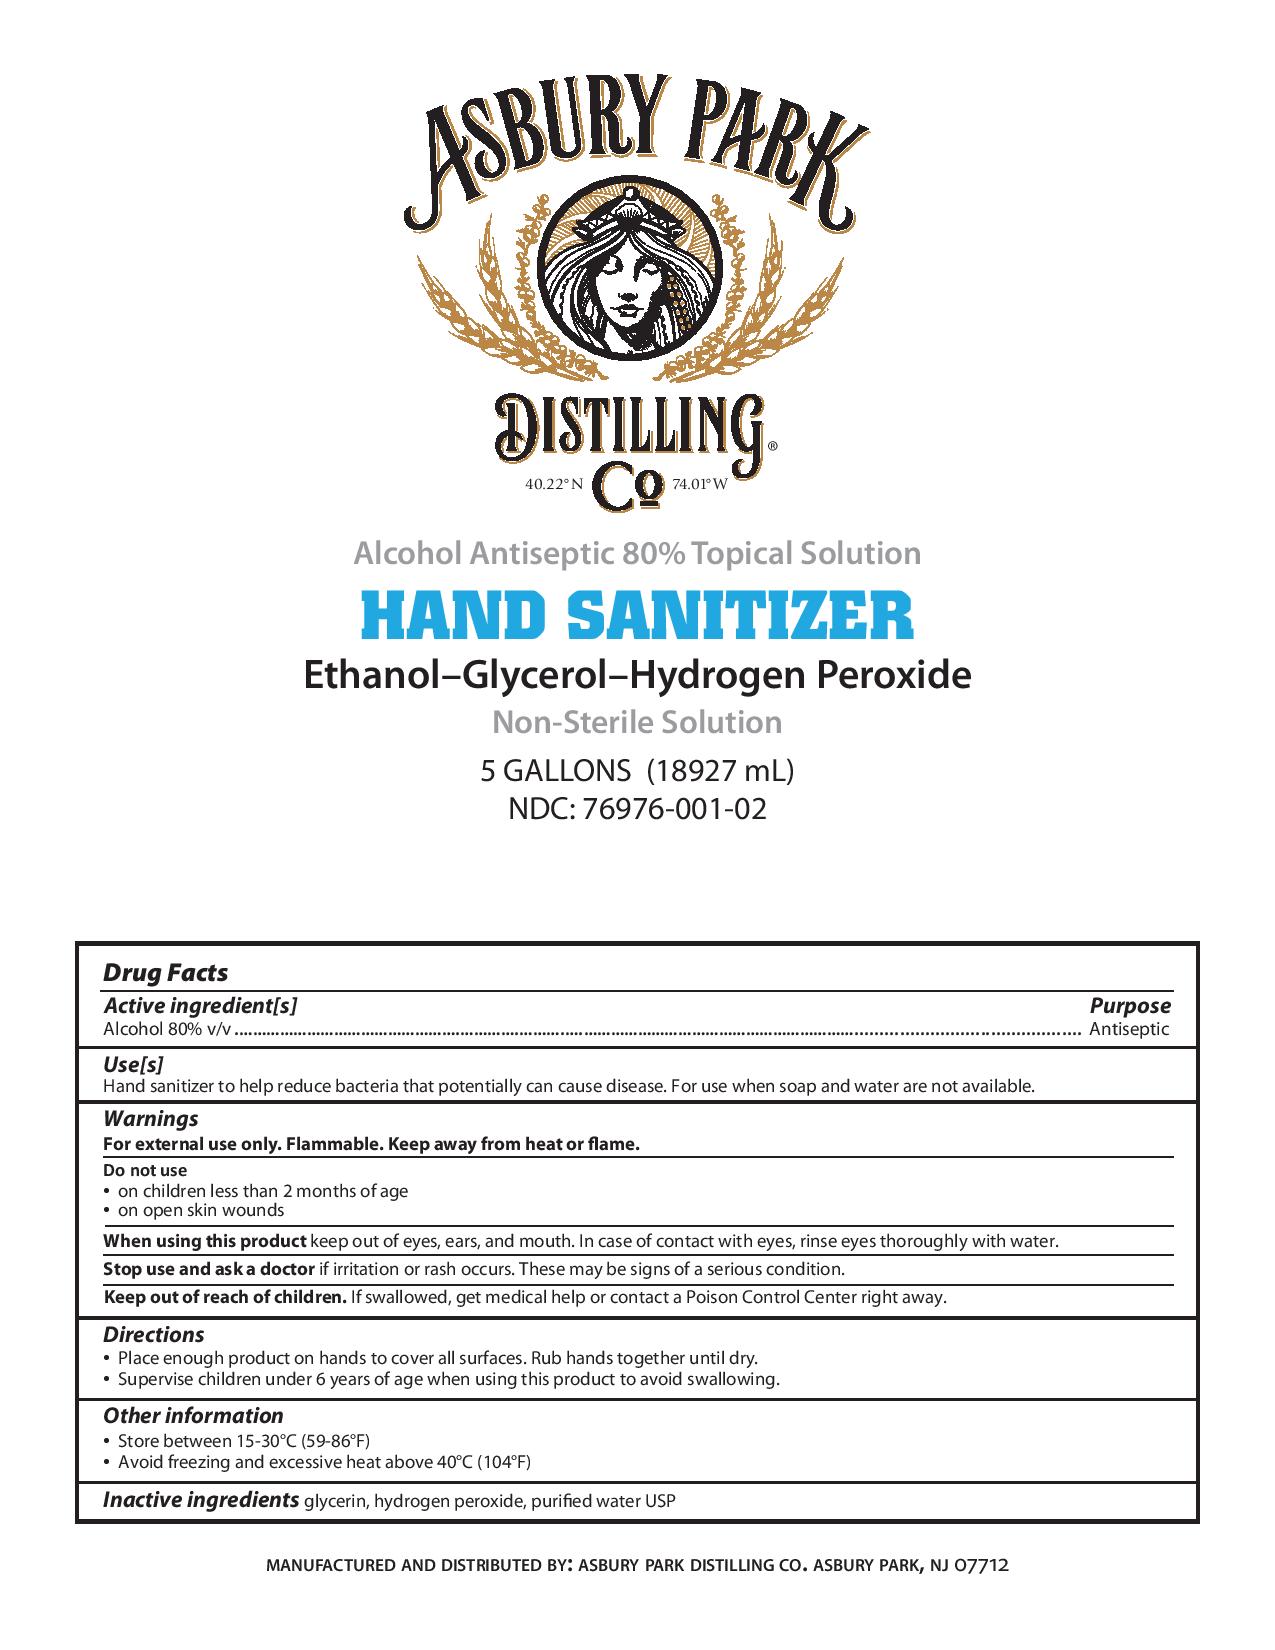 Hand Sanitizer Label 5 gallons.jpg